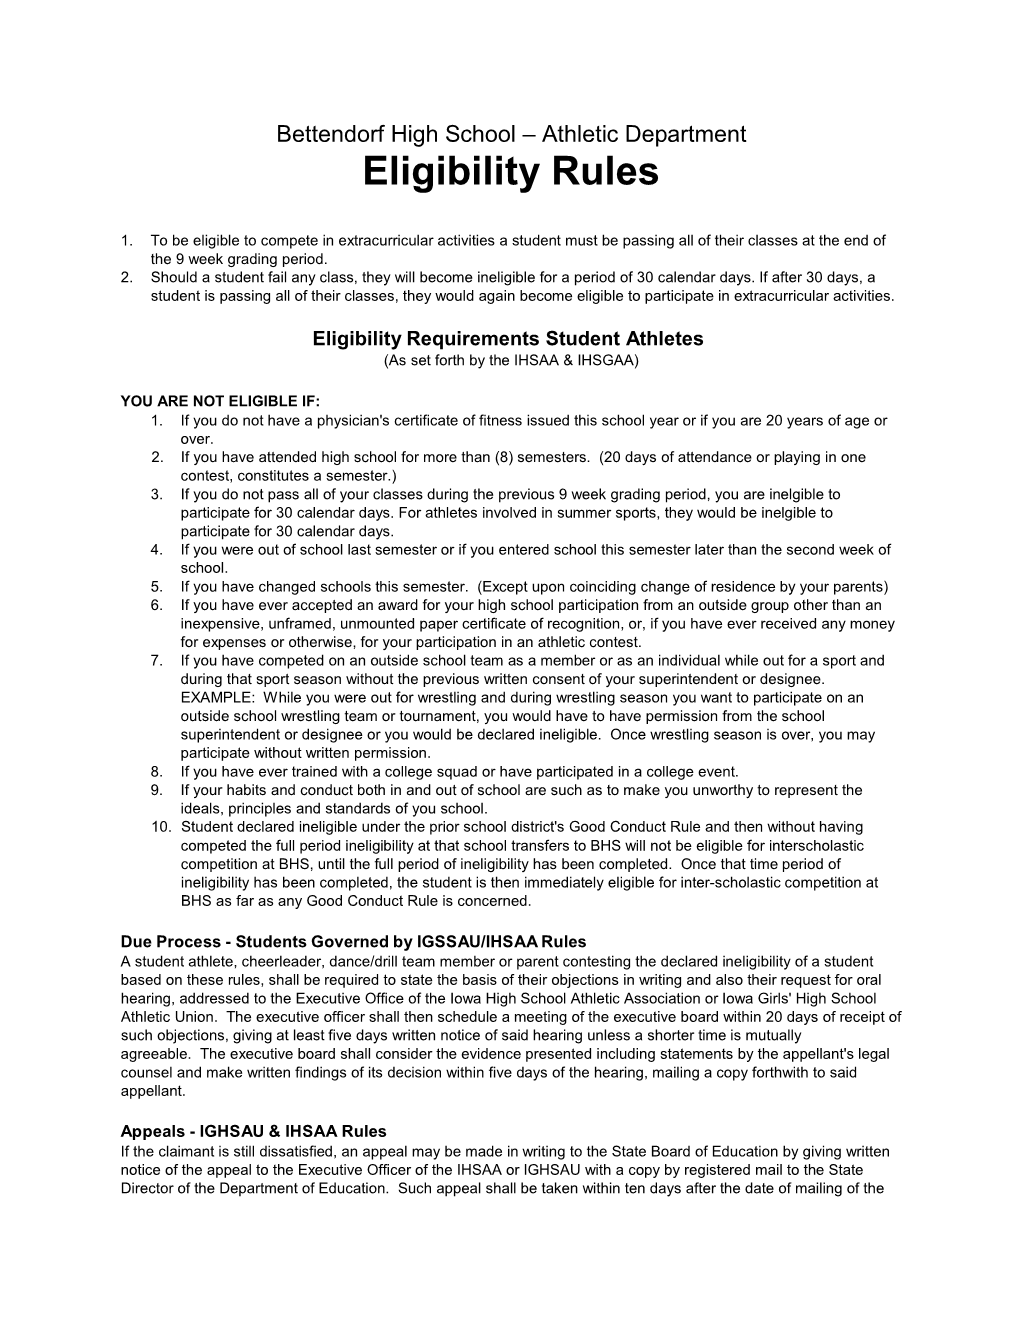 Eligibility Rules